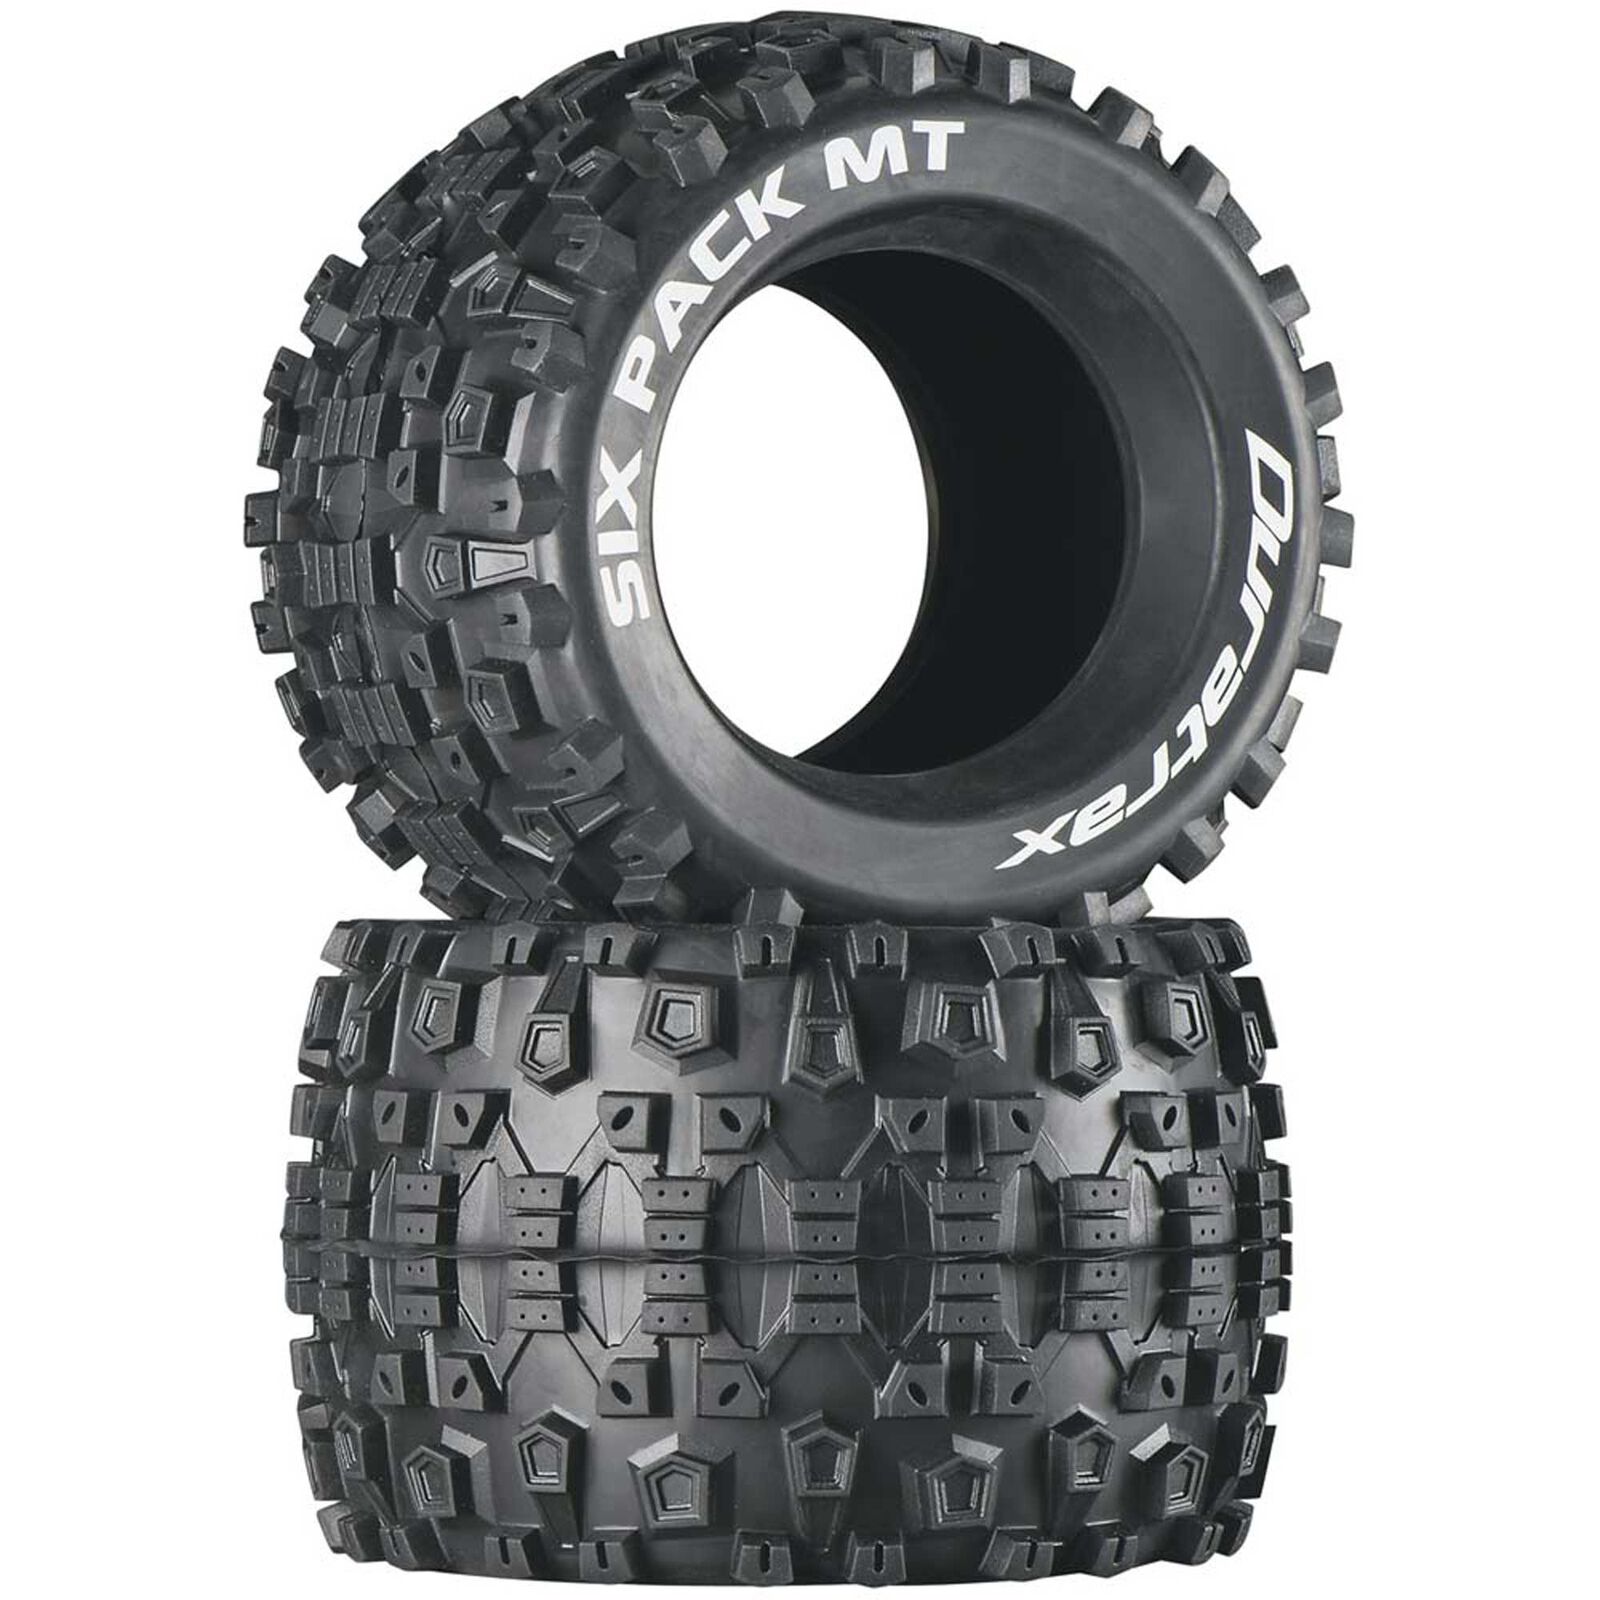 Six Pack MT 3.8" Tires (2)